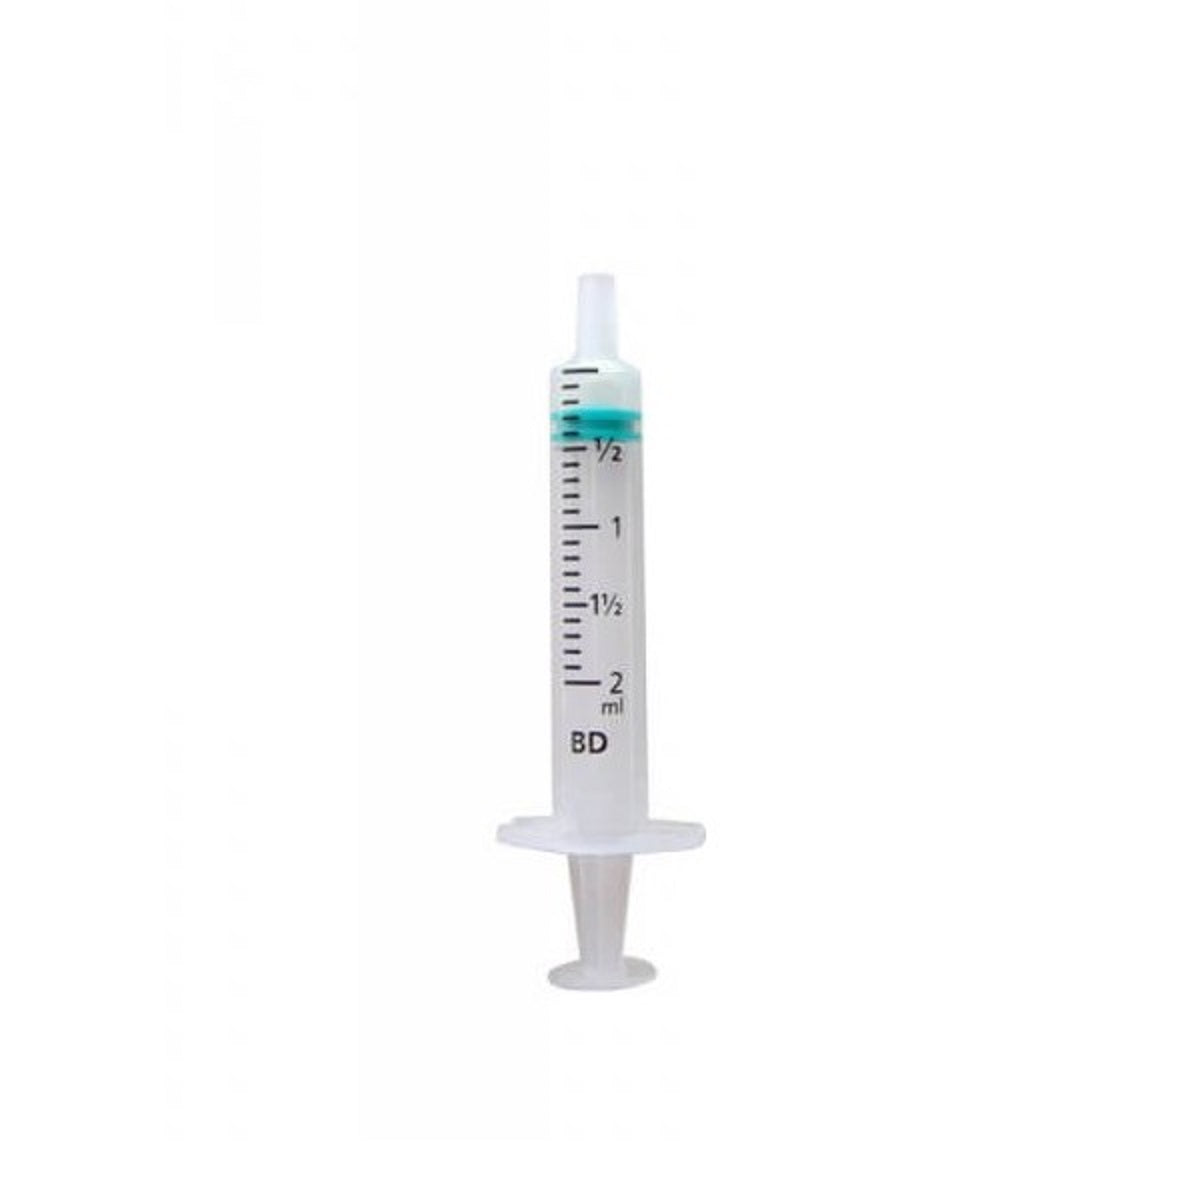 2ml fertilizer dosing syringe